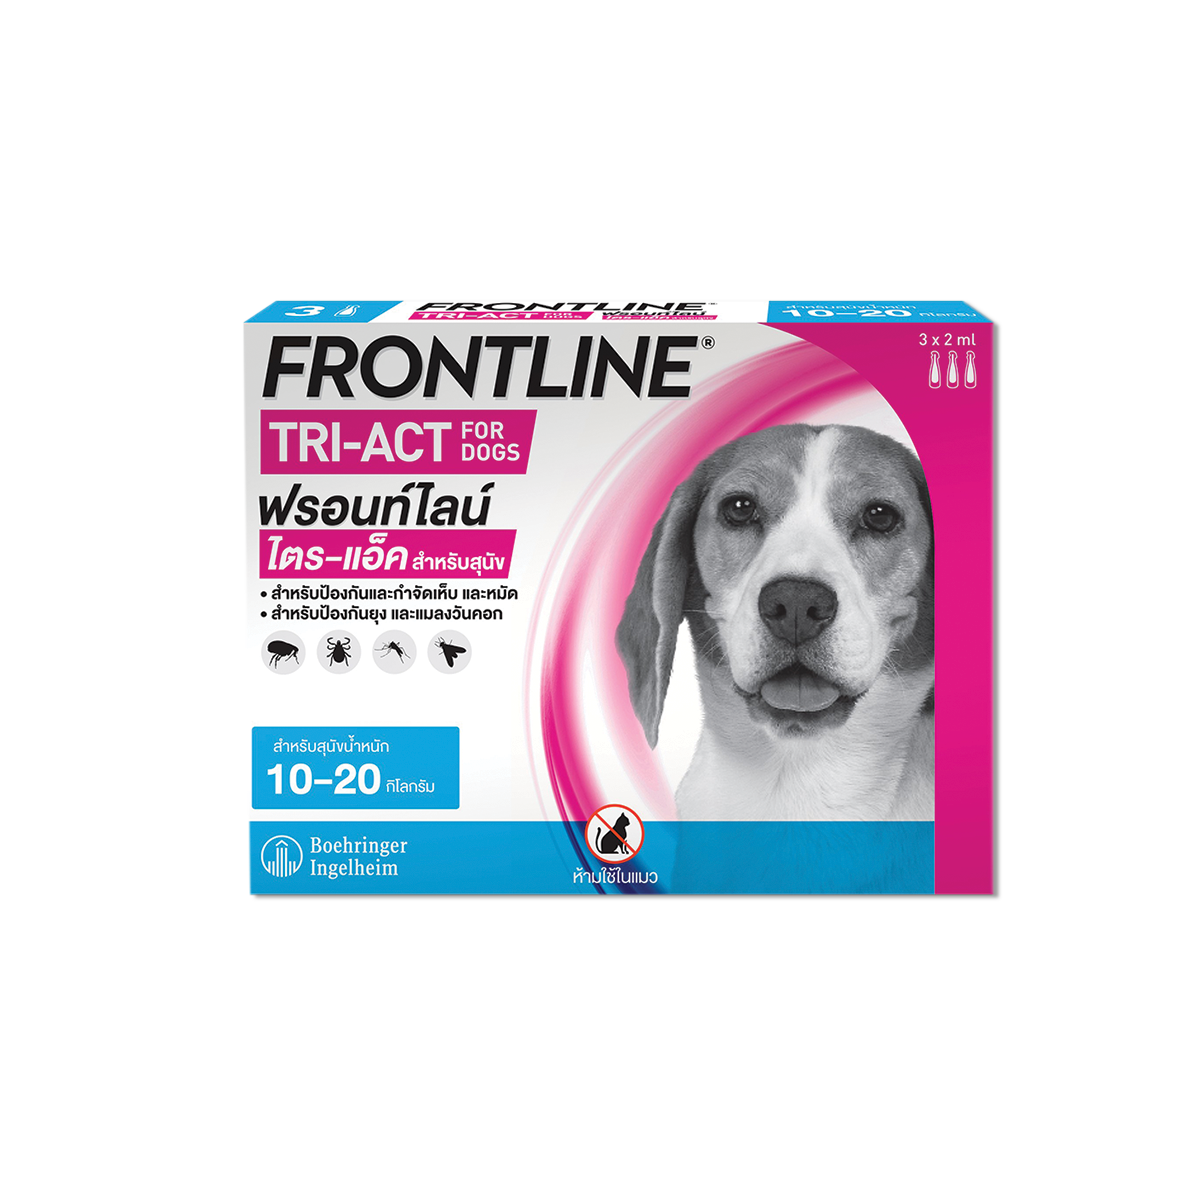 Frontline Tri-Act for Dog Size M ฟรอนท์ไลน์ ไตร-แอ็ค สำหรับสุนัข น้ำหนัก 10-20 กิโลกรัม